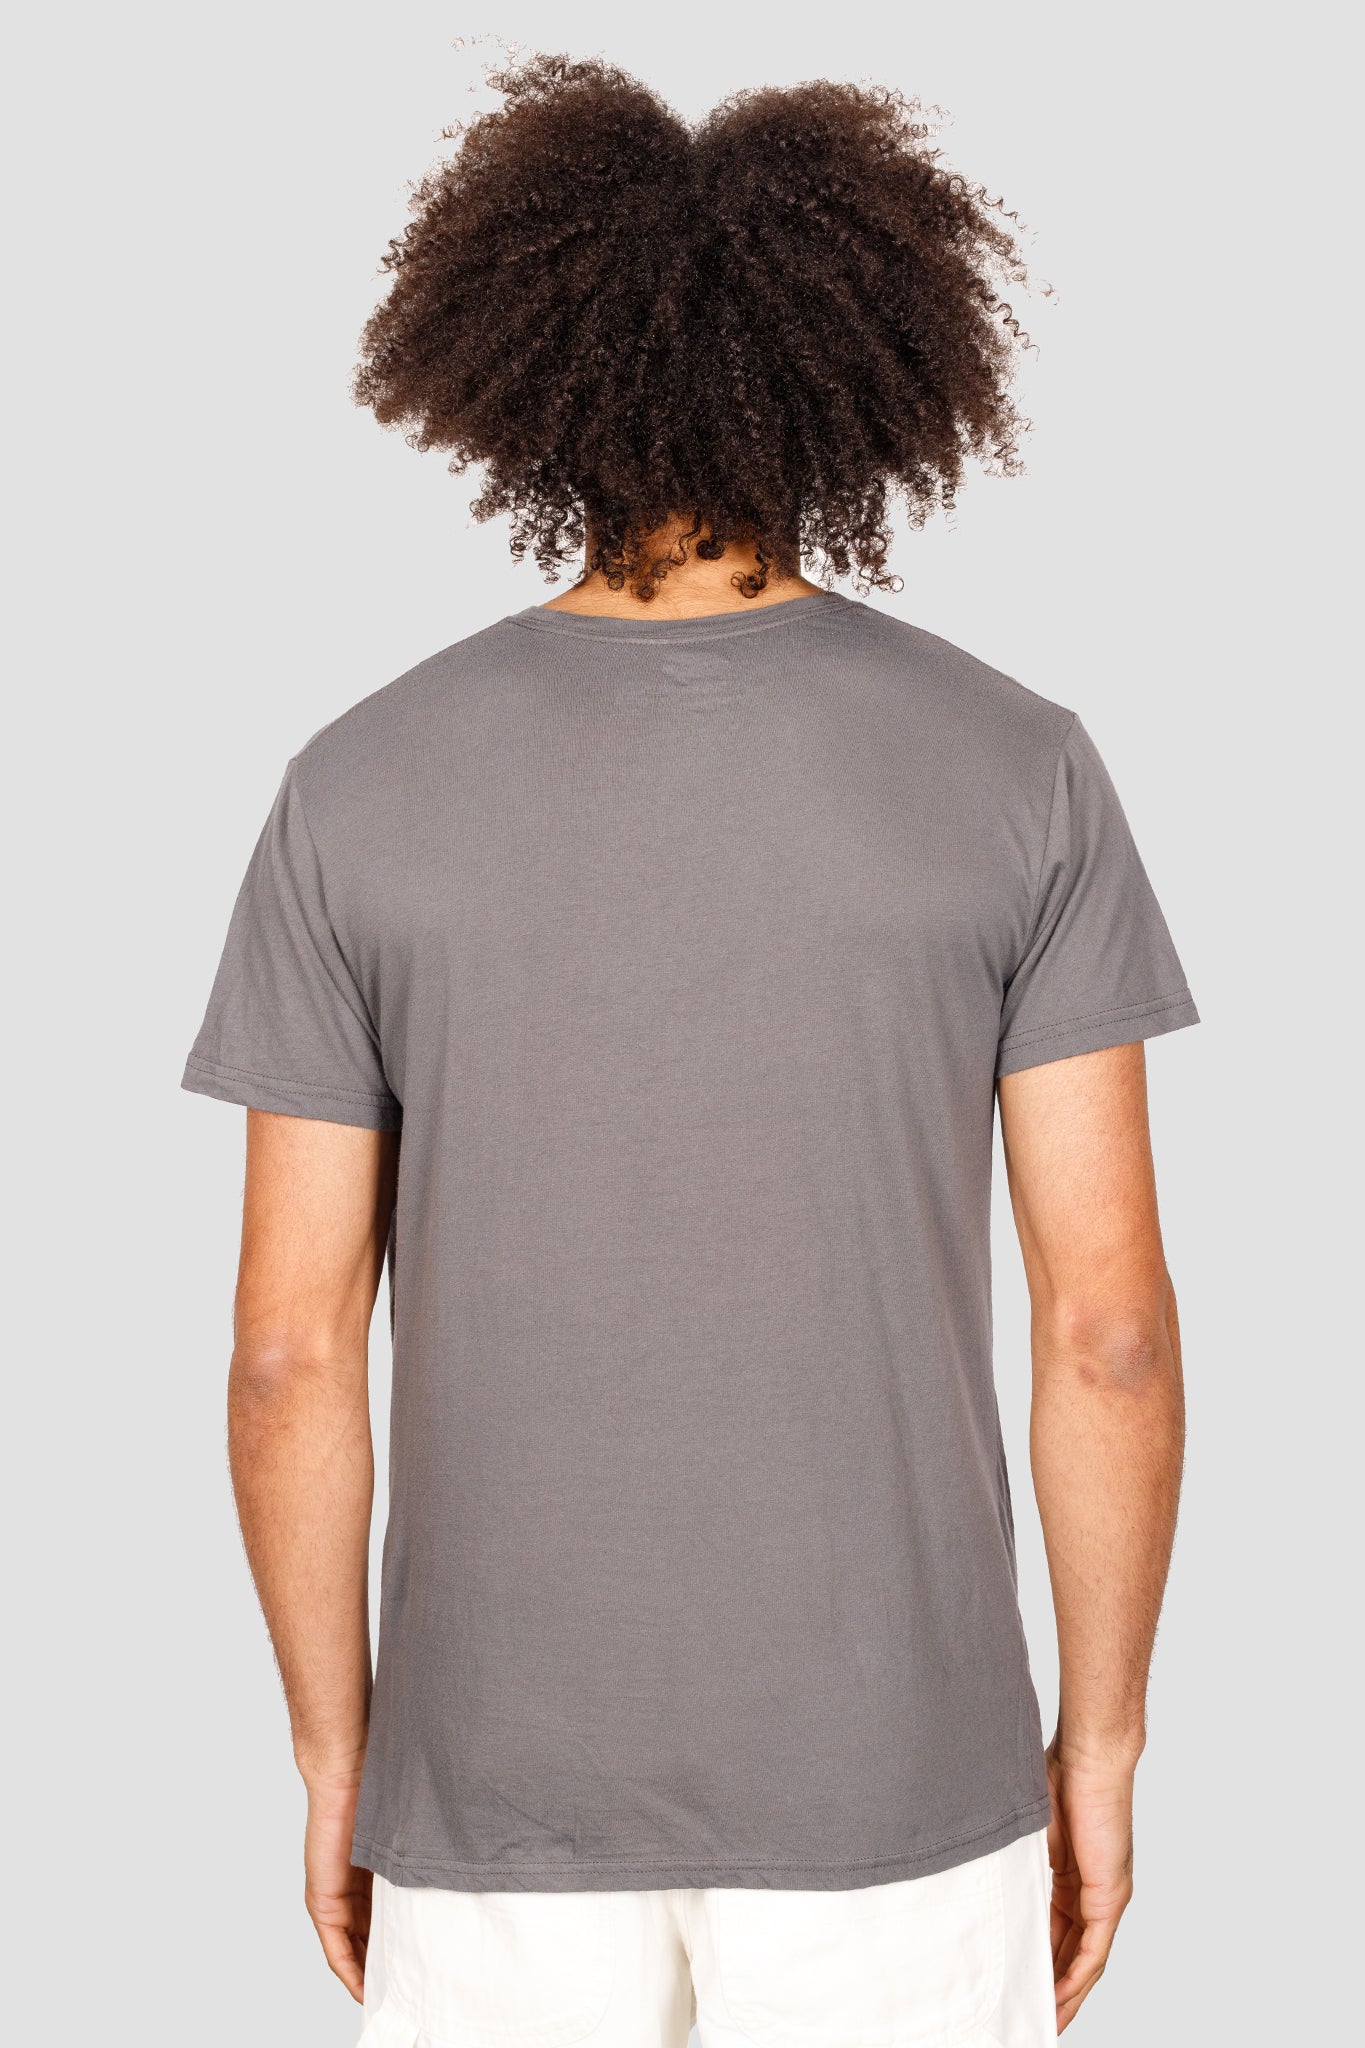 Rays Surf Tee T-Shirts Retro Brand   